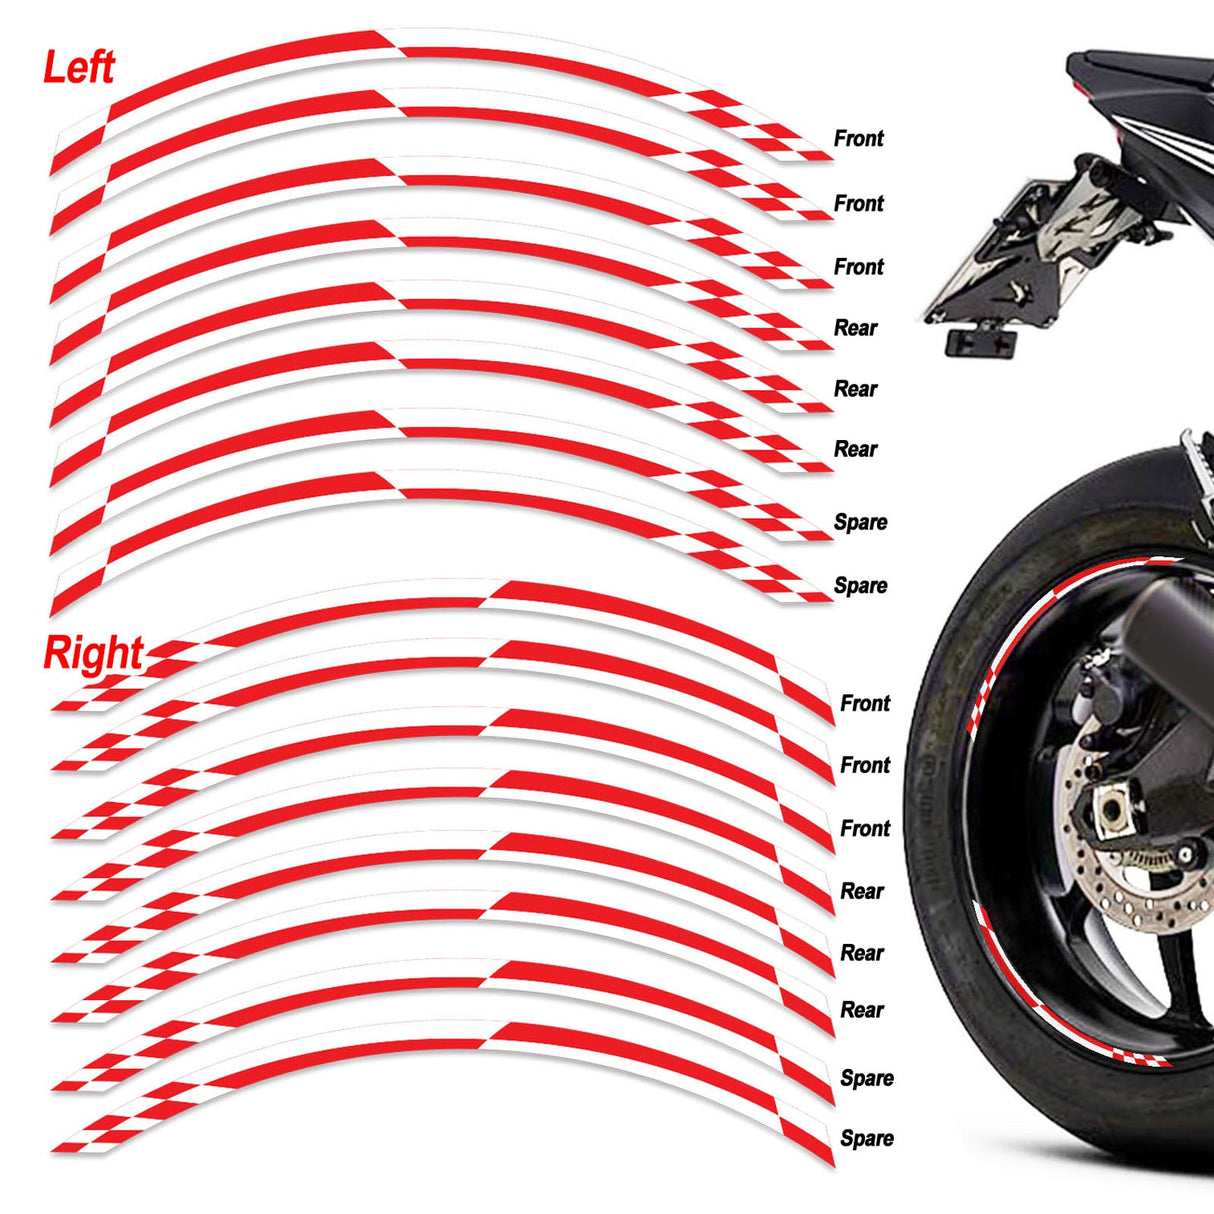 StickerBao Red Universal 17 inch Motorcycle Check01 White Standard Edge Rim Sticker Check Rim Wheel Decal For For Kawasaki